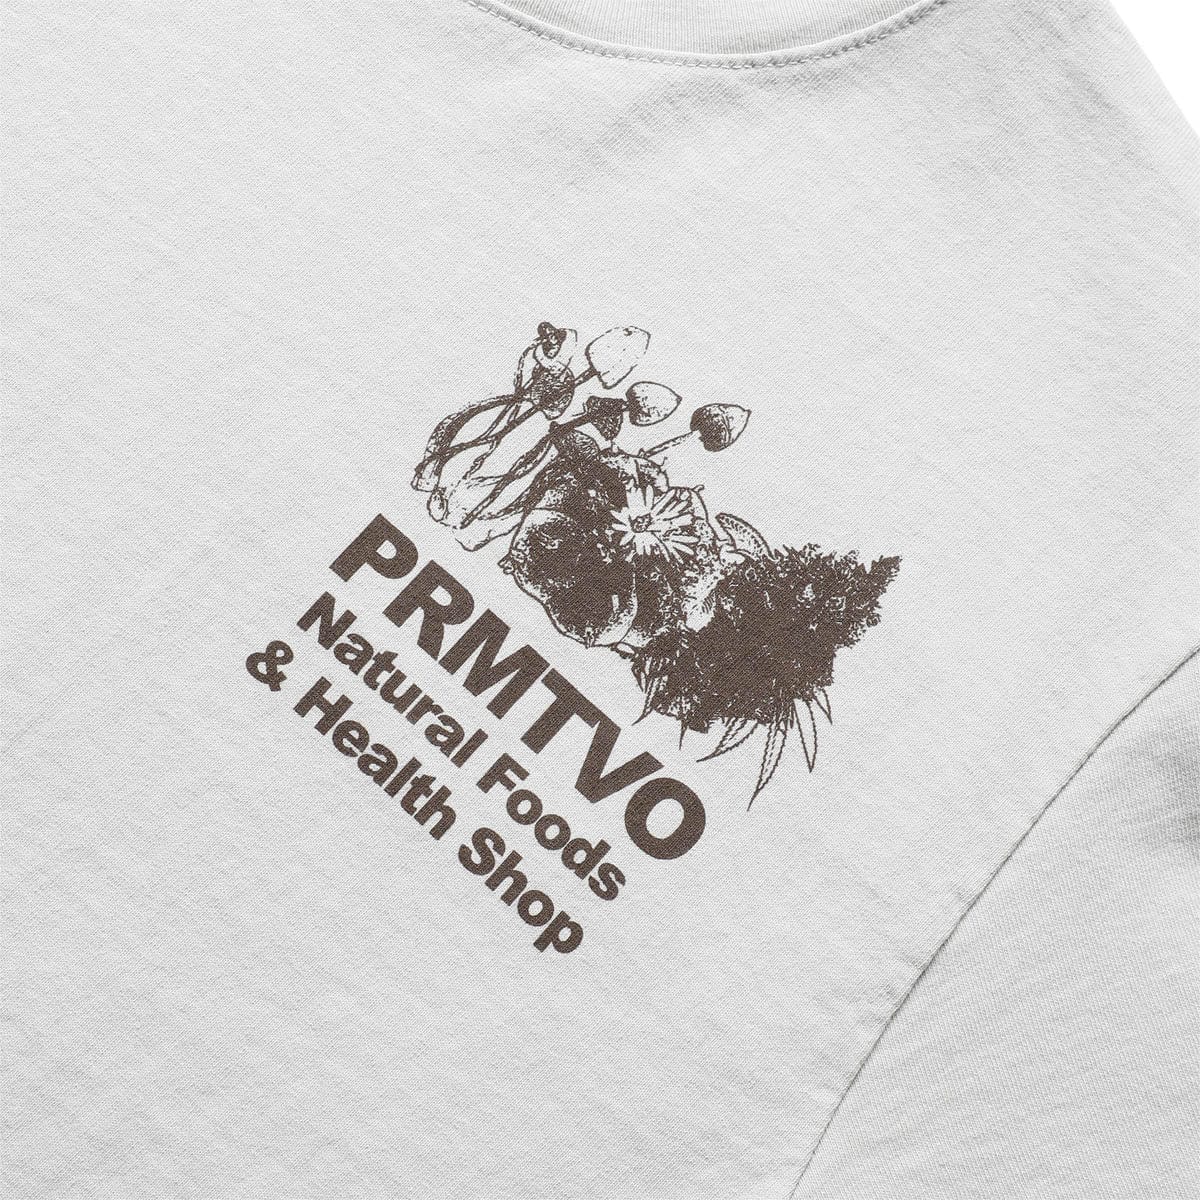 PRMTVO T-Shirt 100% NATURAL PRMTVO T-SHIRT